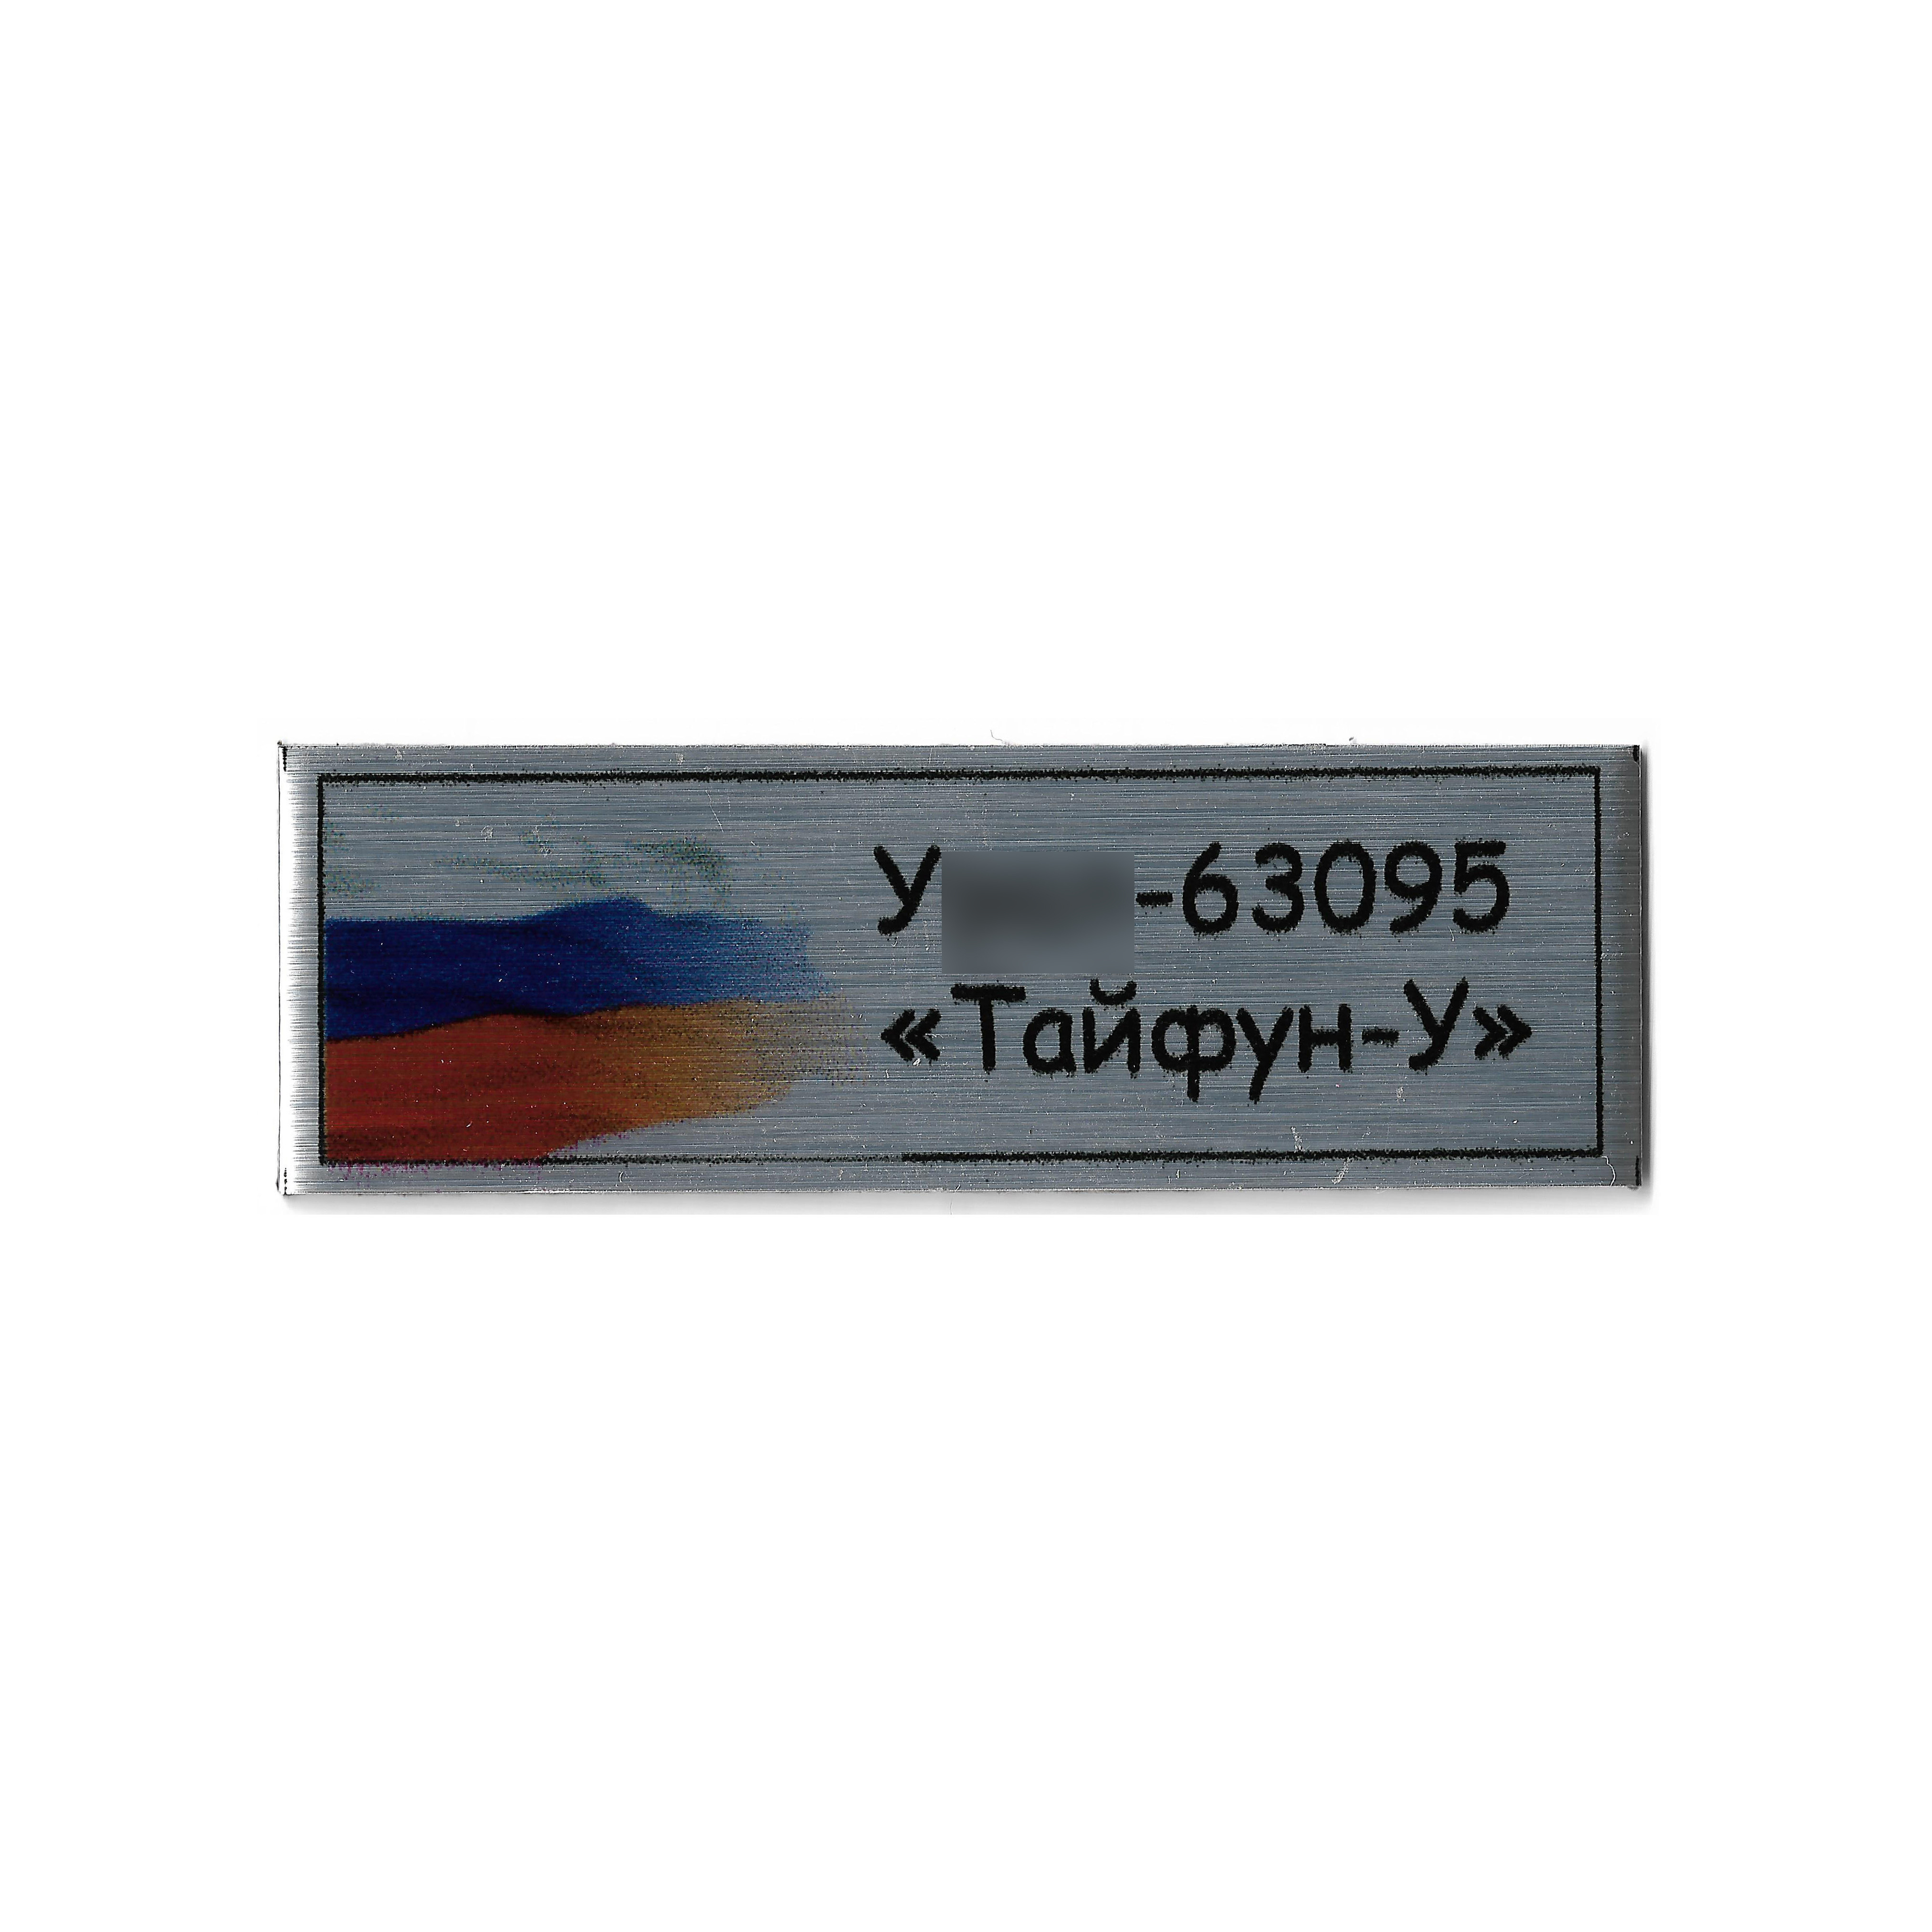 T340 Plate Табличка для Бронеавтомобиля У-63095 